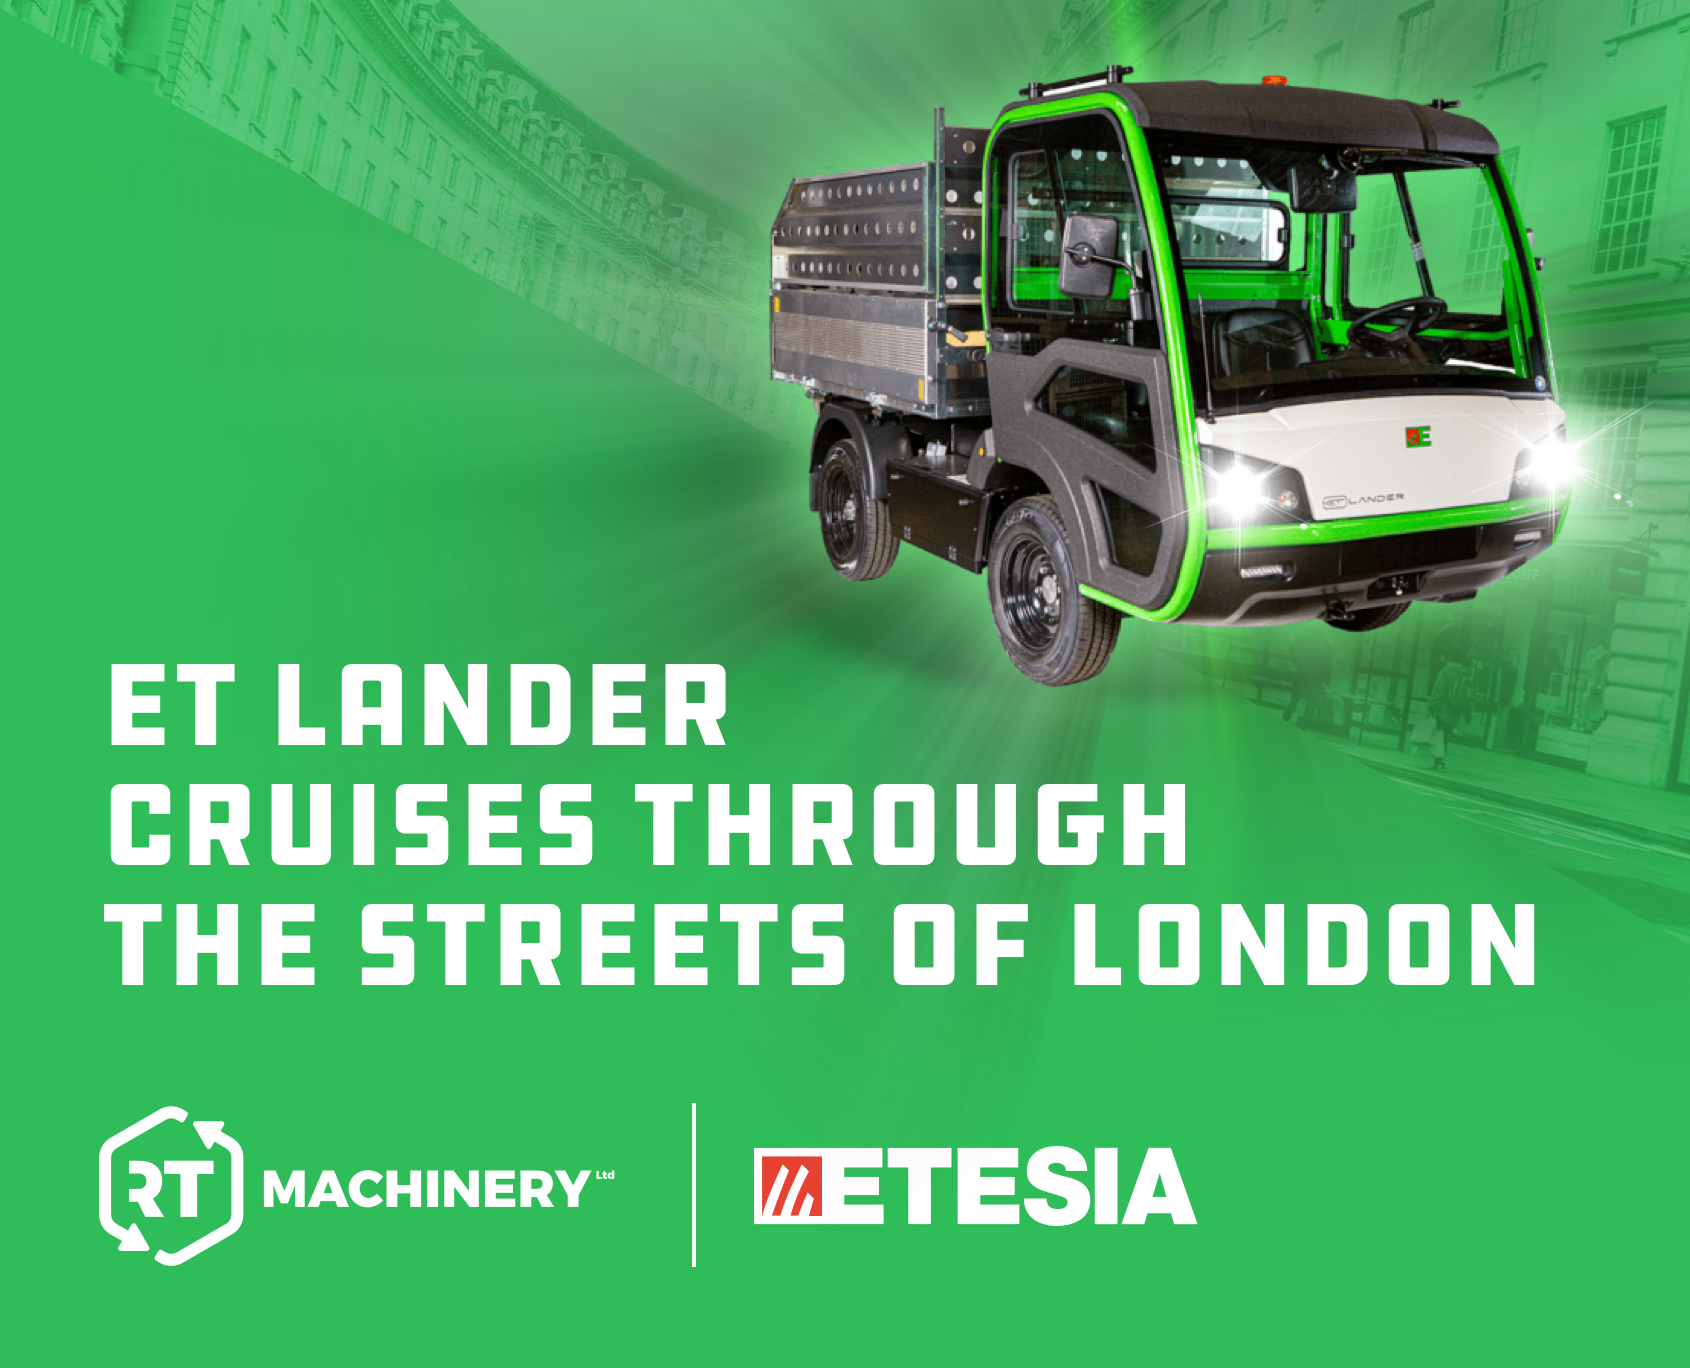 ET Lander Cruises Through the Streets of London